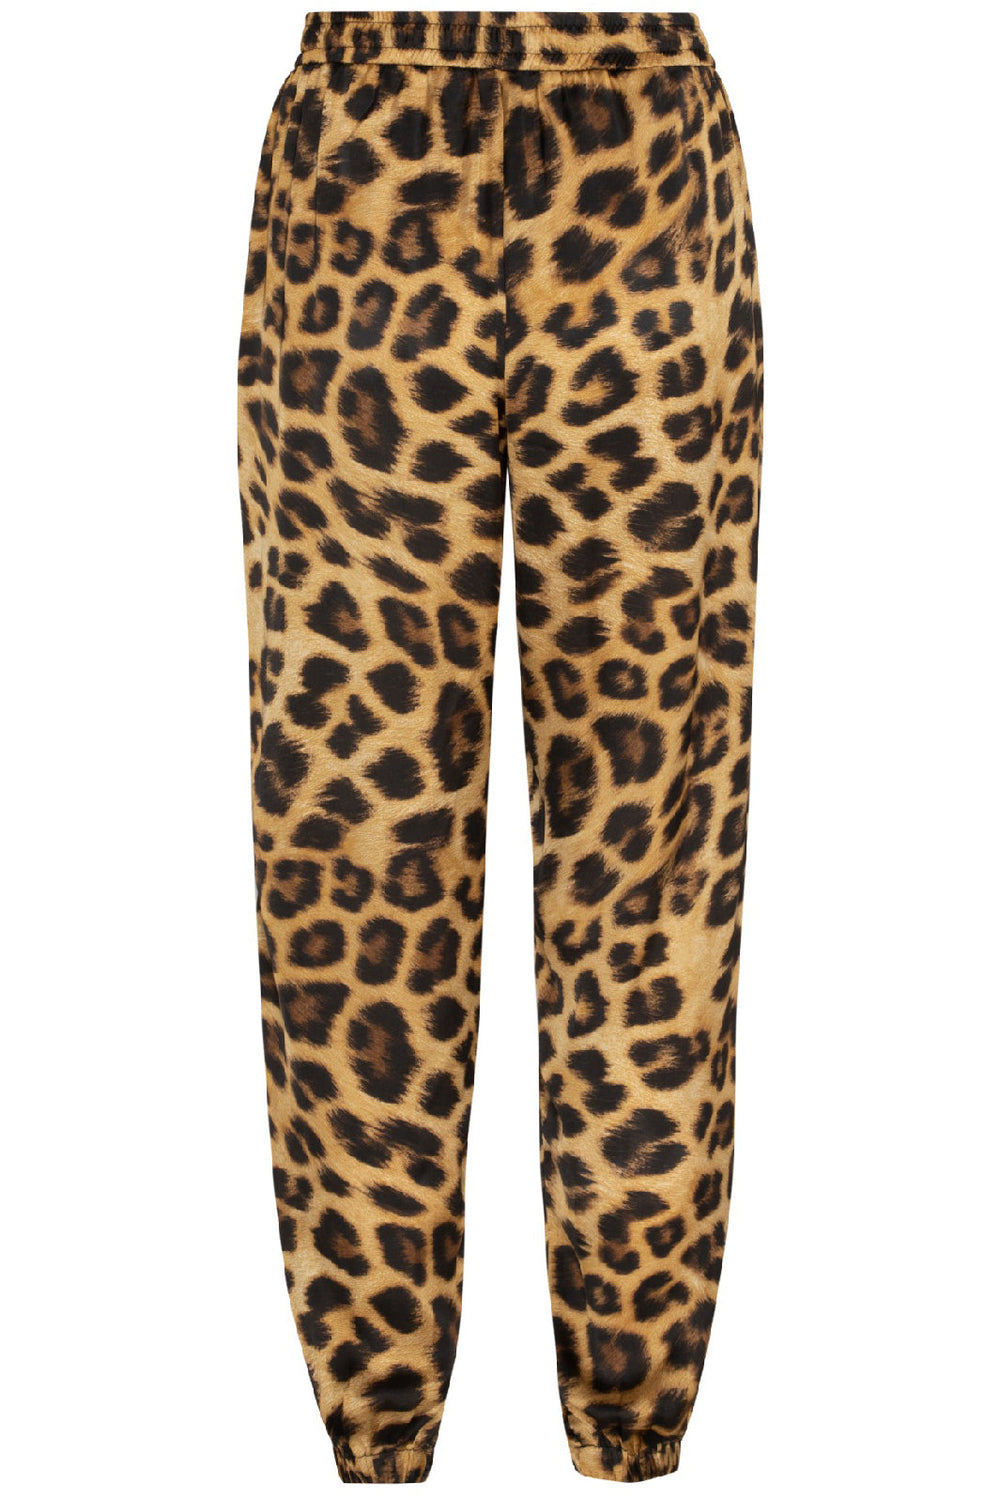 Karmamia - Cora Pants - Leopard Bukser 